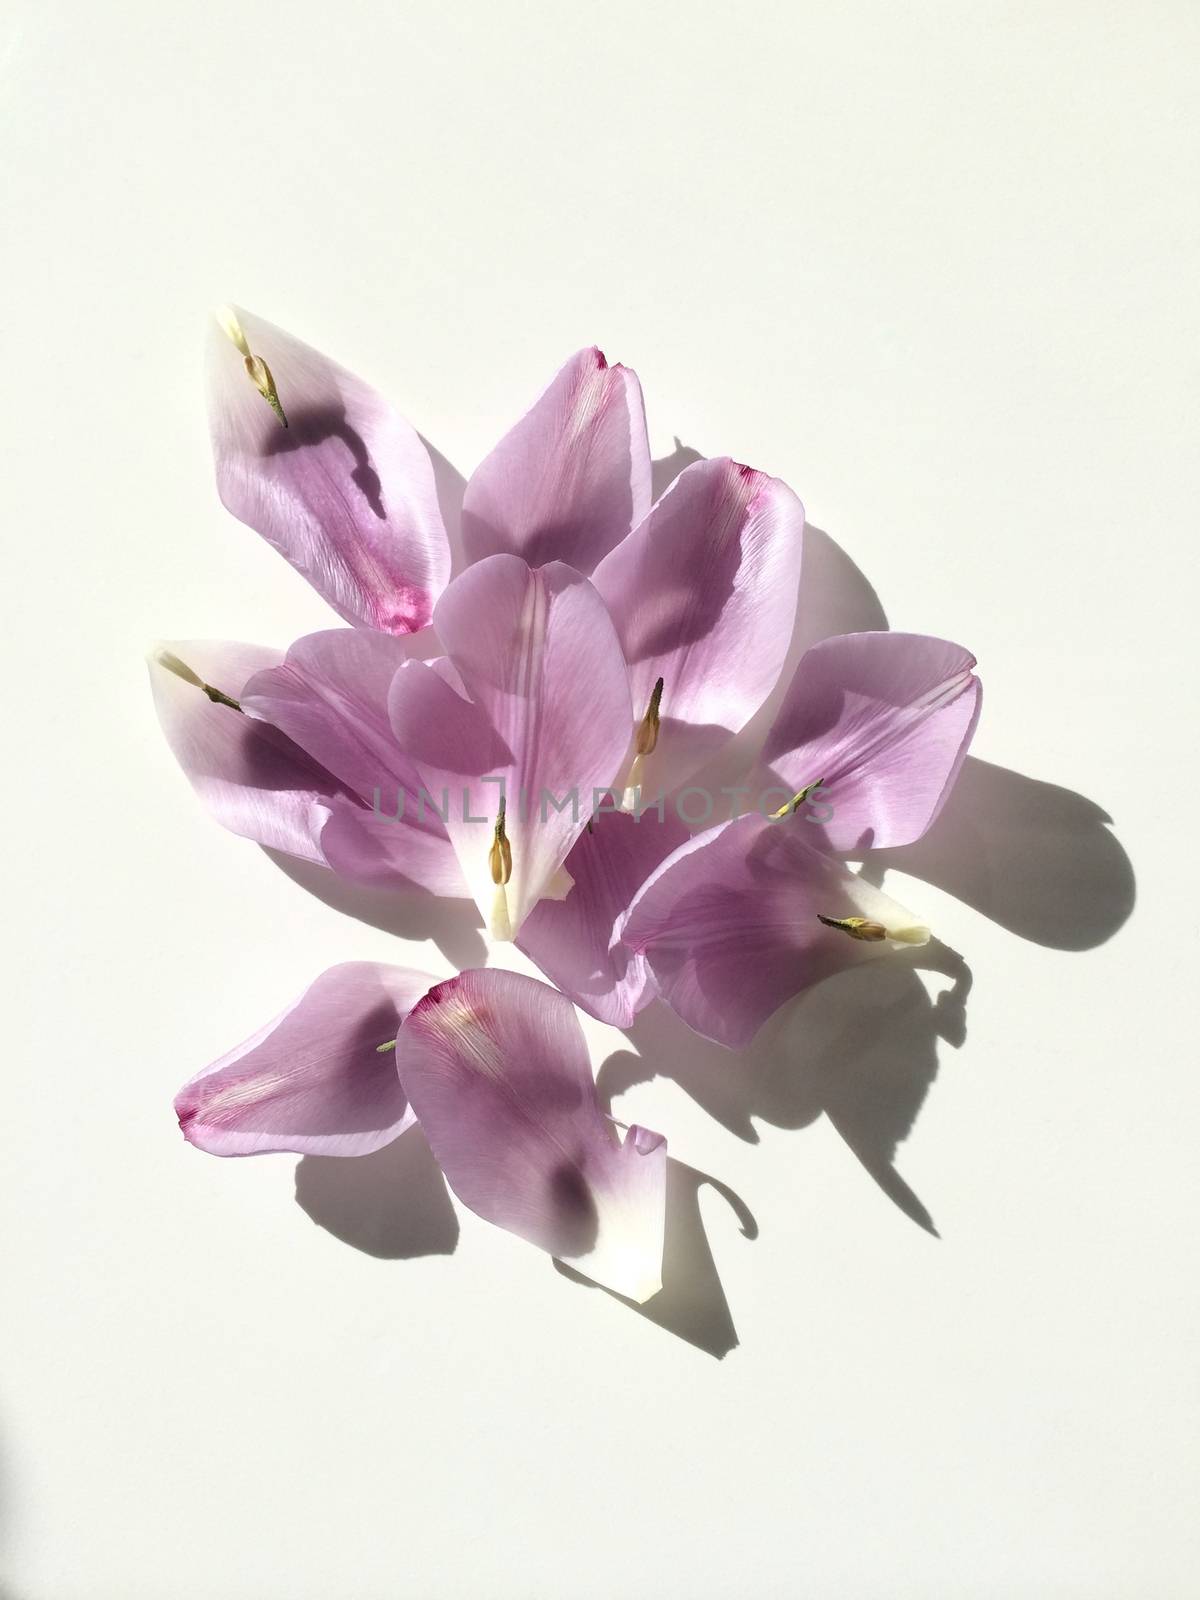 Tulip petals by mmm